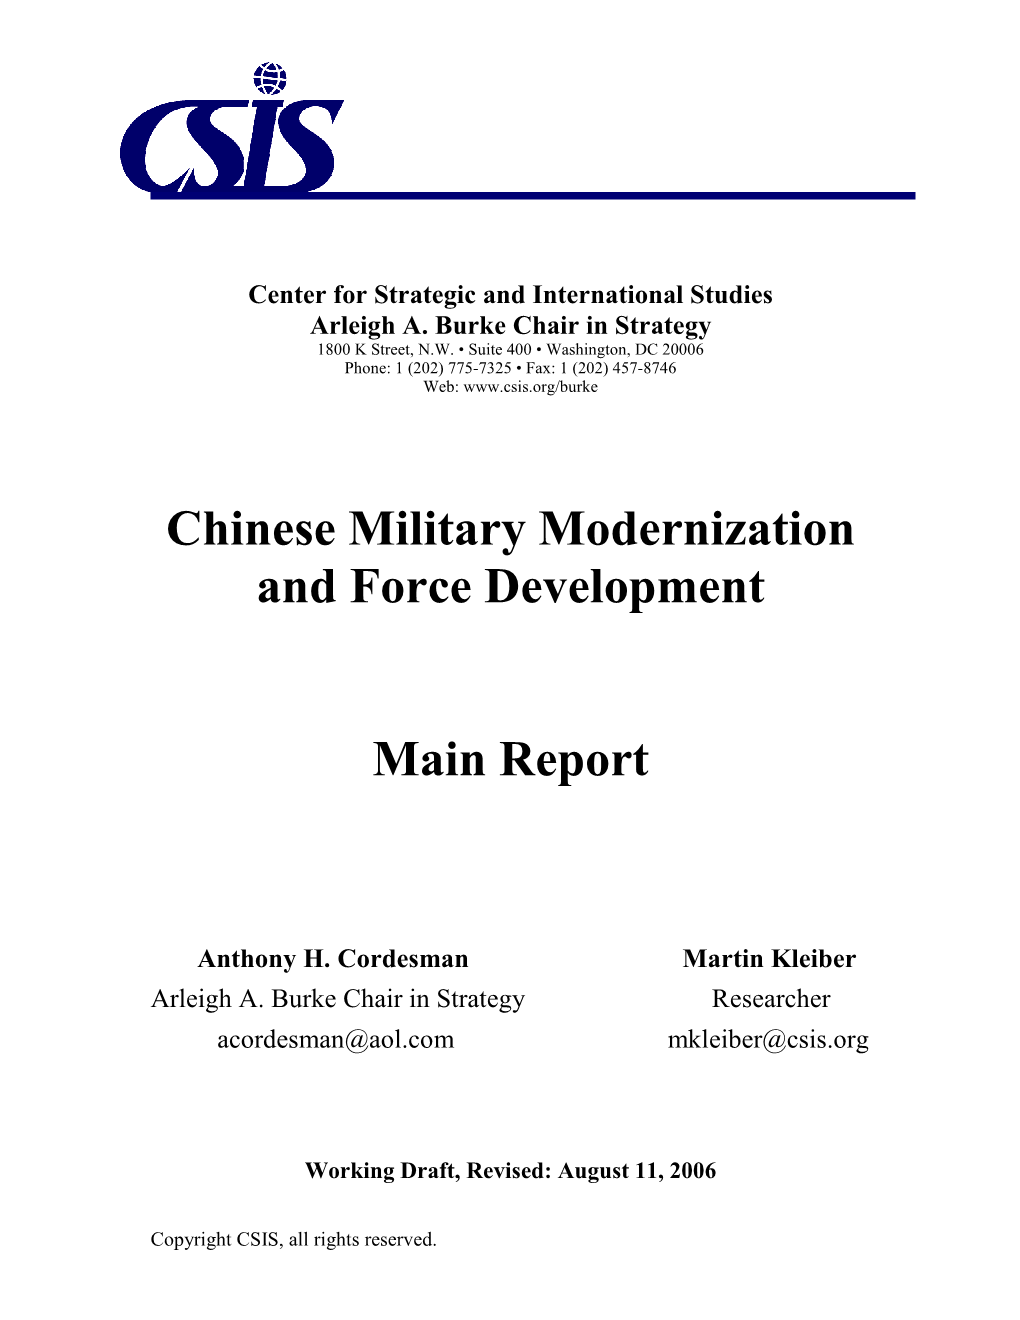 Chinese Military Modernization and Force Development Main Report